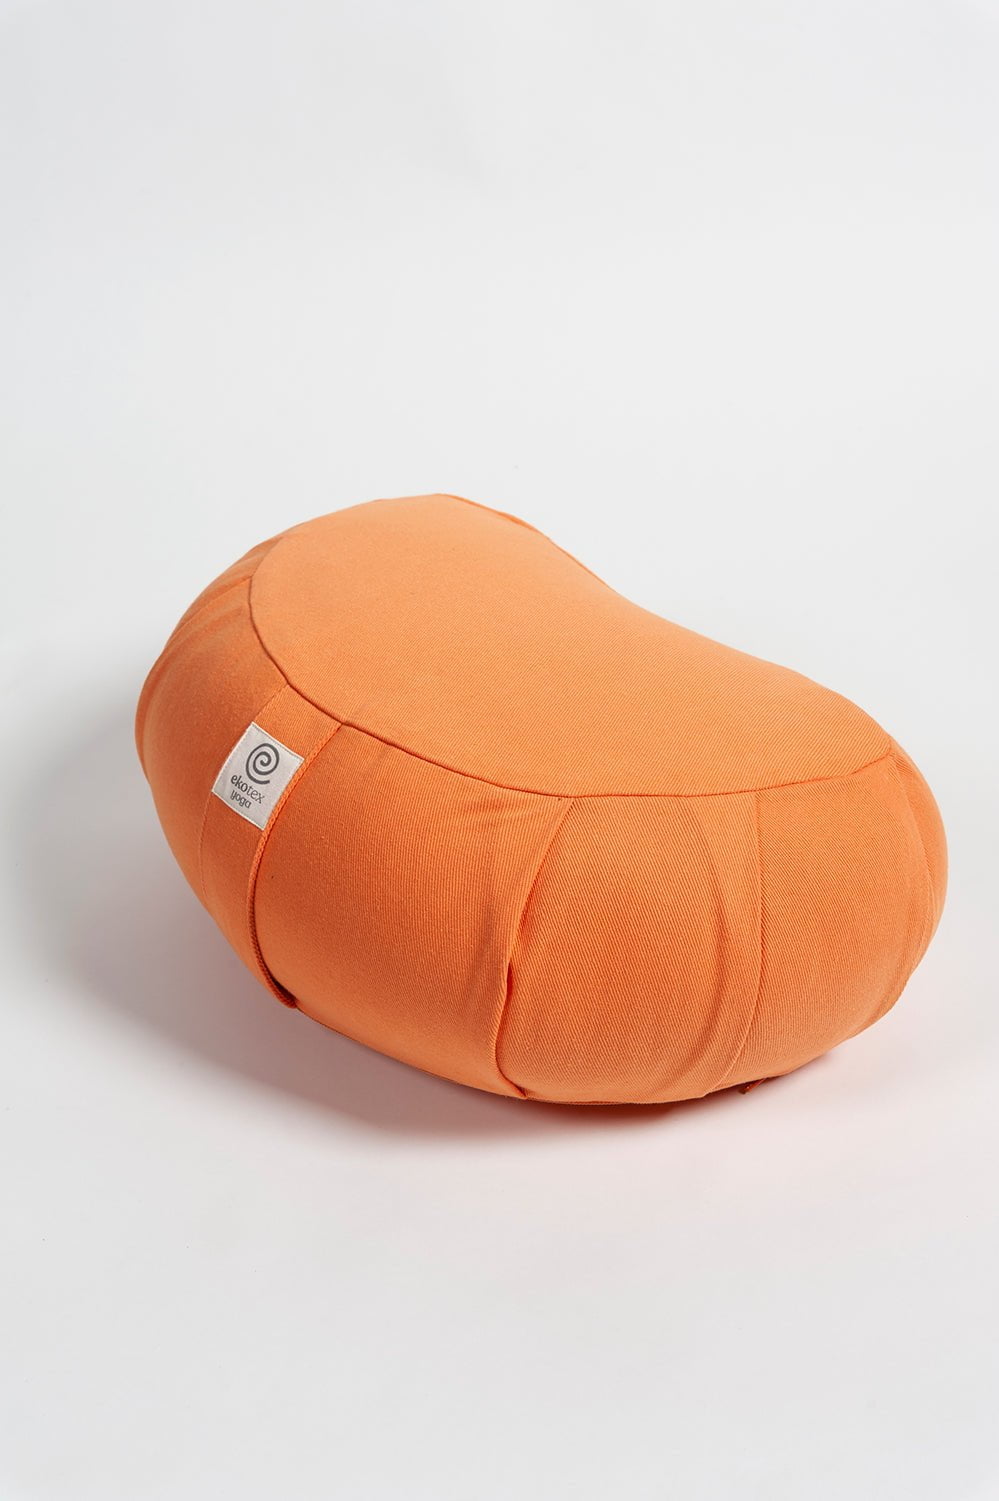 Meditation Cushions Spelt / Apricot Organic Cotton Crescent Meditation Cushions